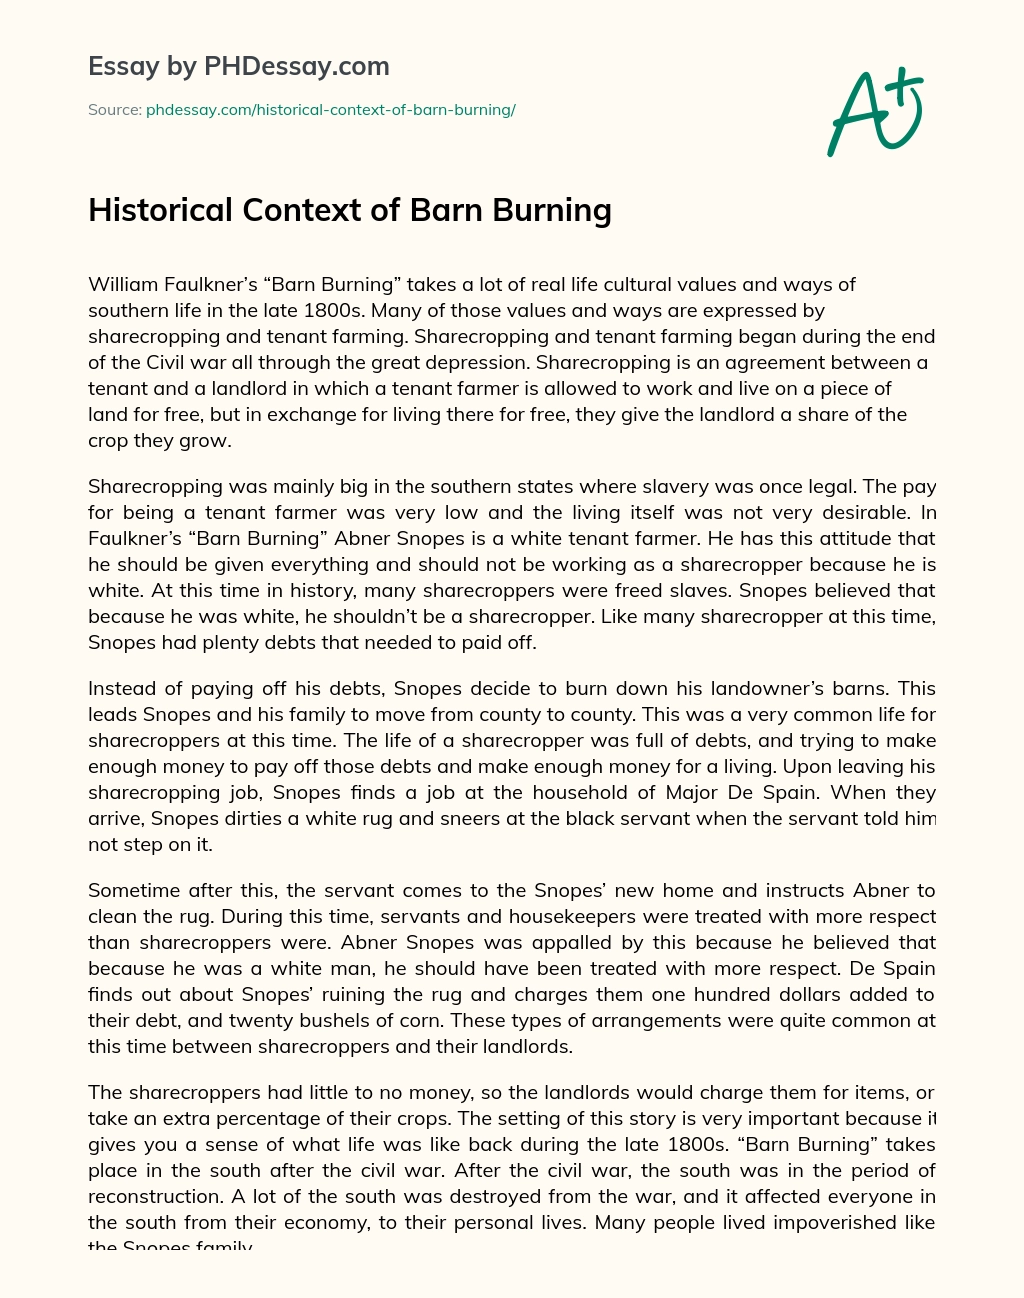 Historical Context of Barn Burning essay